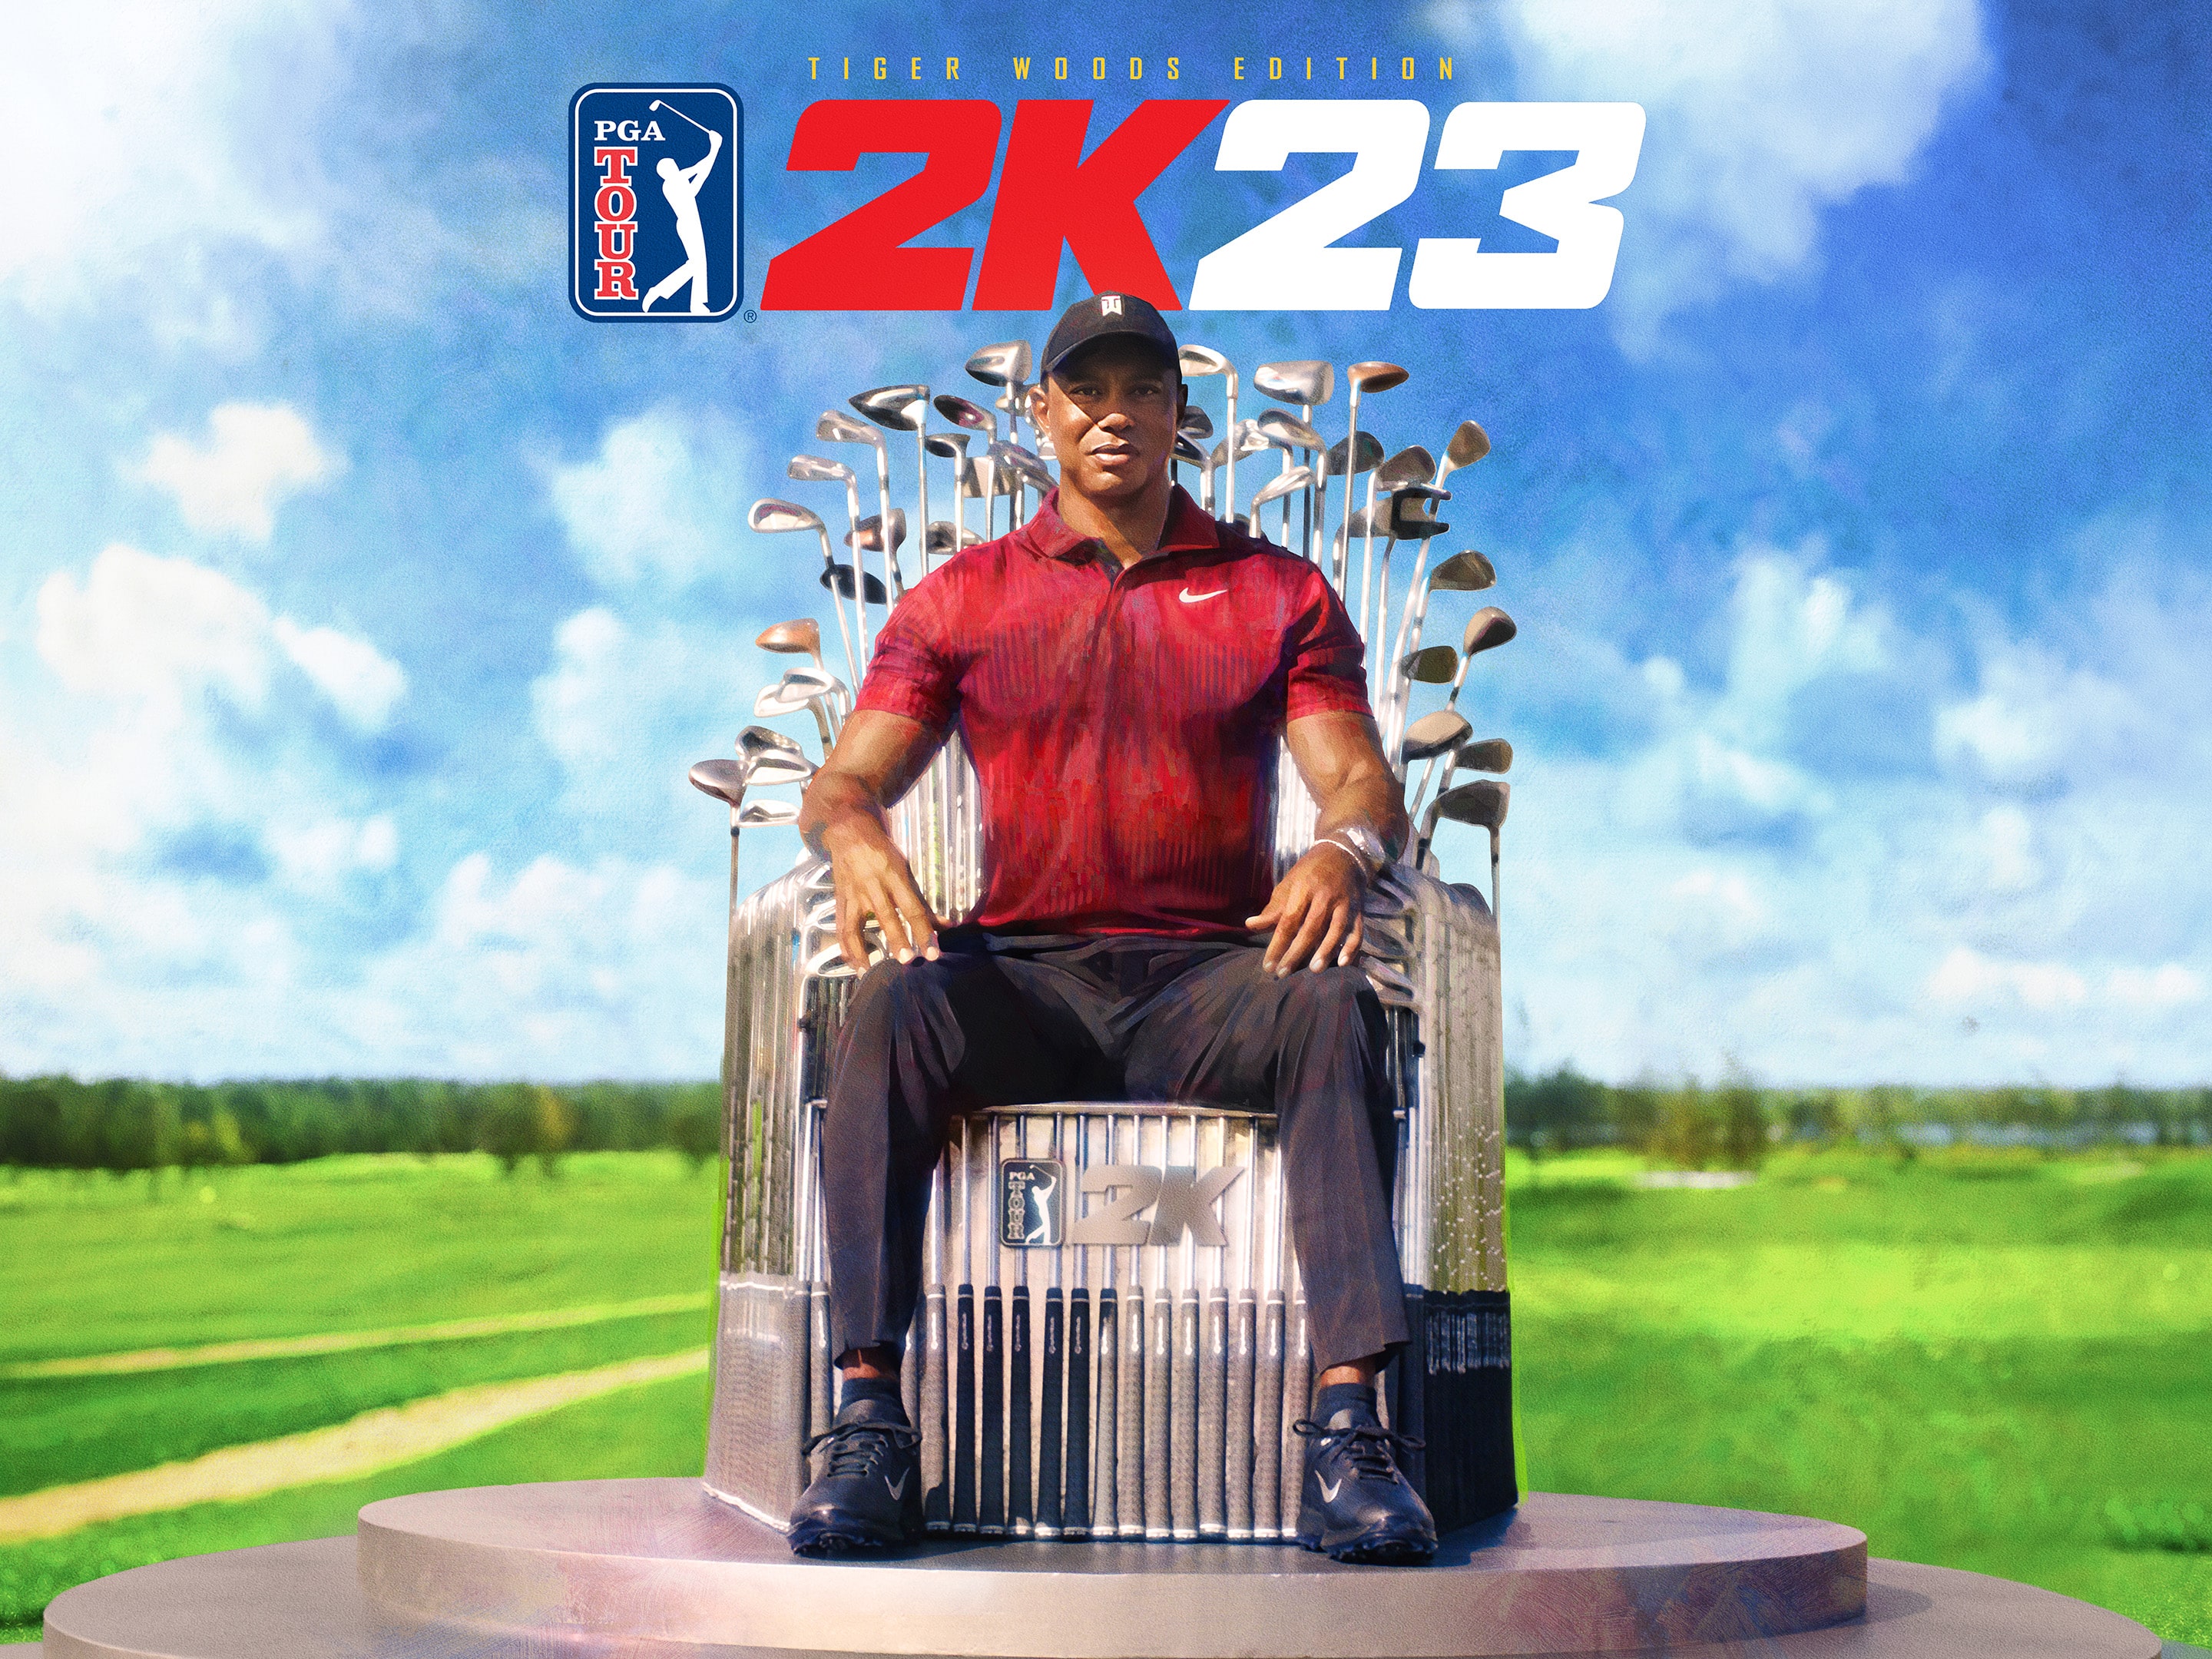 Woods PGA TOUR 2K23 Edition Tiger